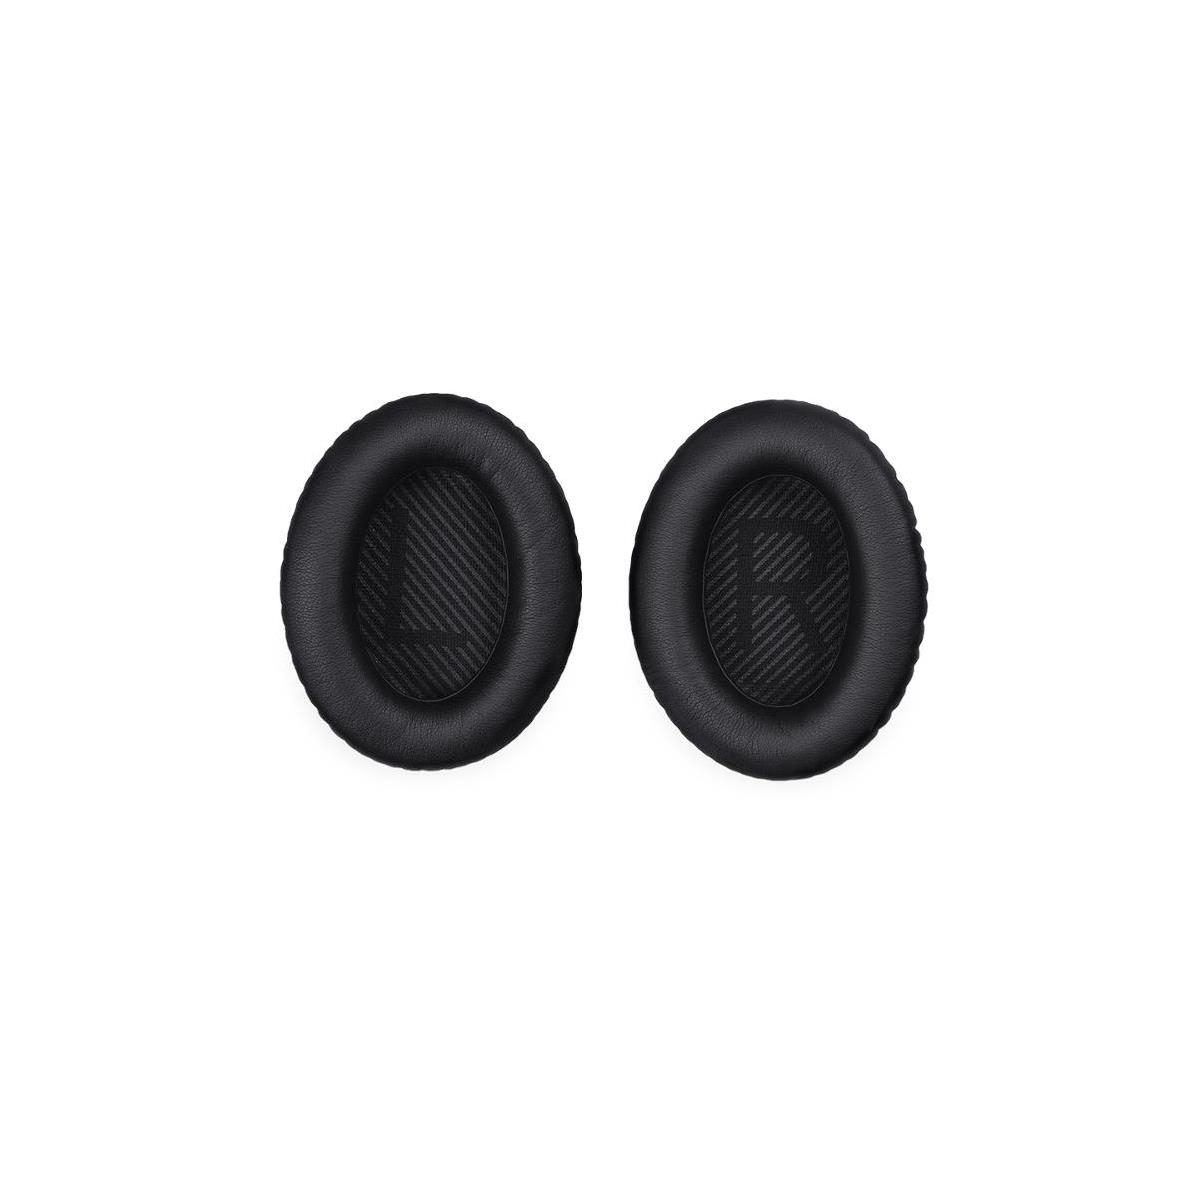 Image of Bose Ear Cushion Kit for QuietComfort 35 Headphones